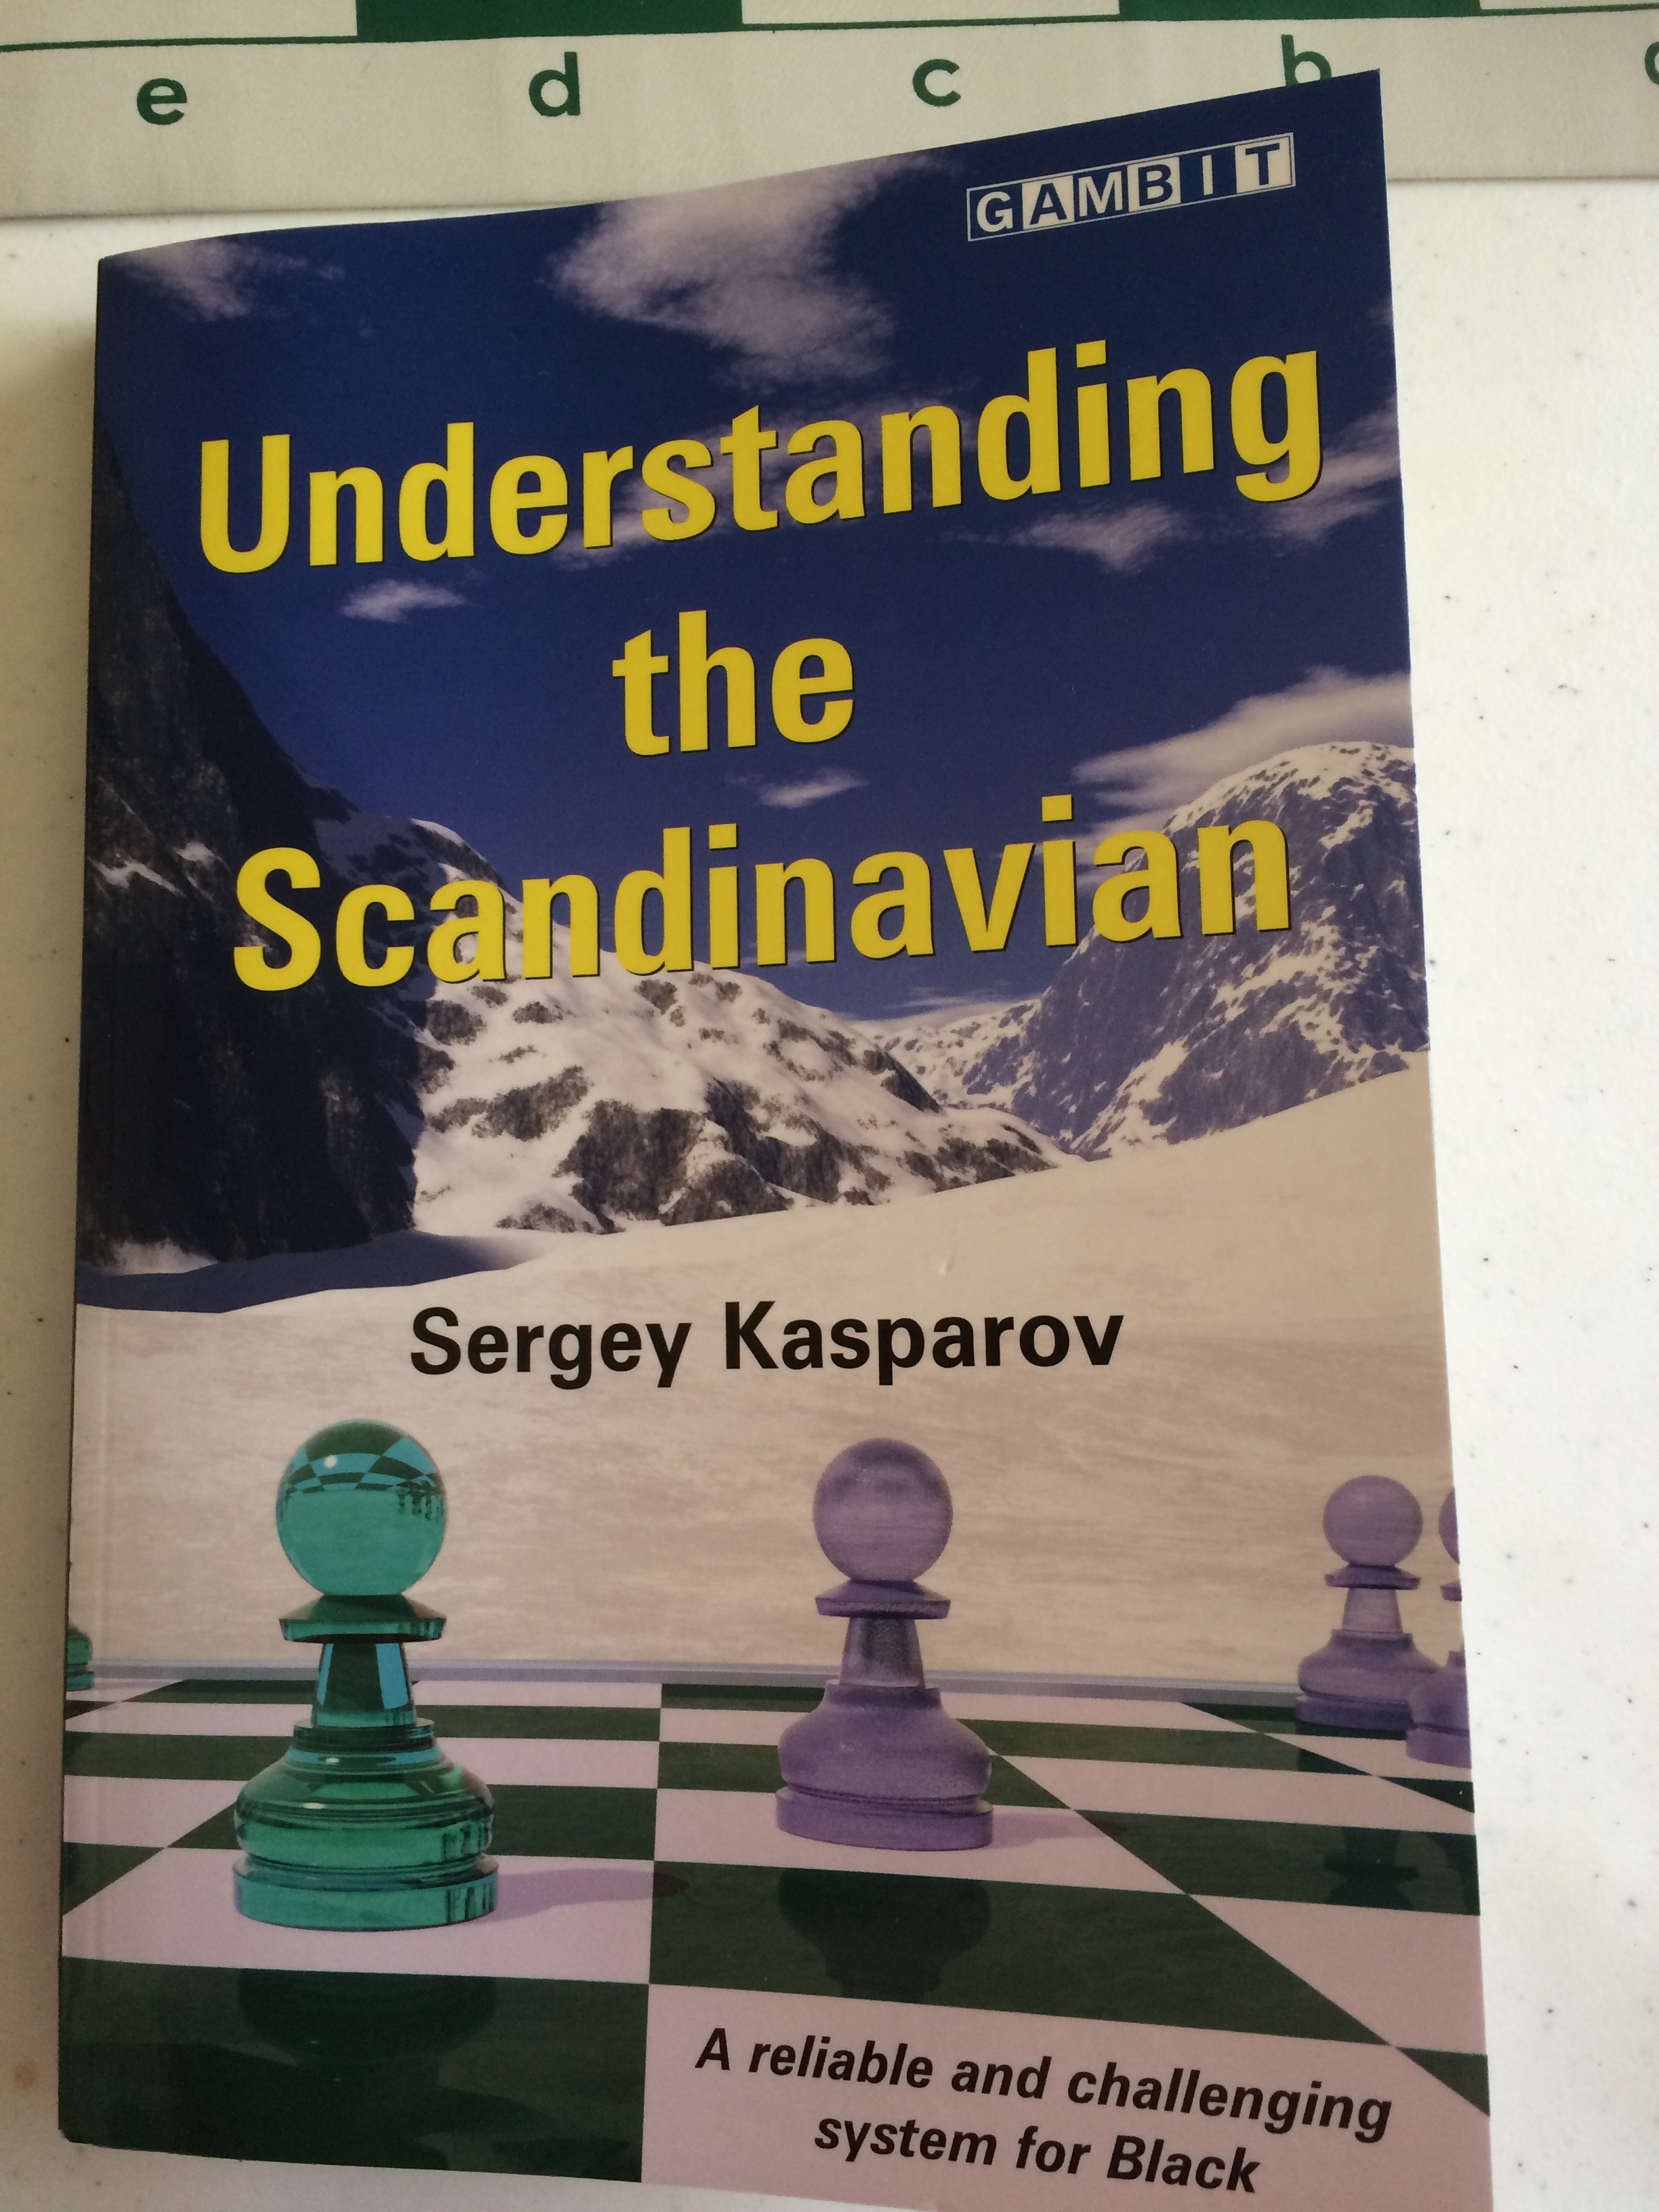 Chess Opening Secrets Revealed*: Chess: Understanding the Sicilian Defense  (Sozin Variation) Part I